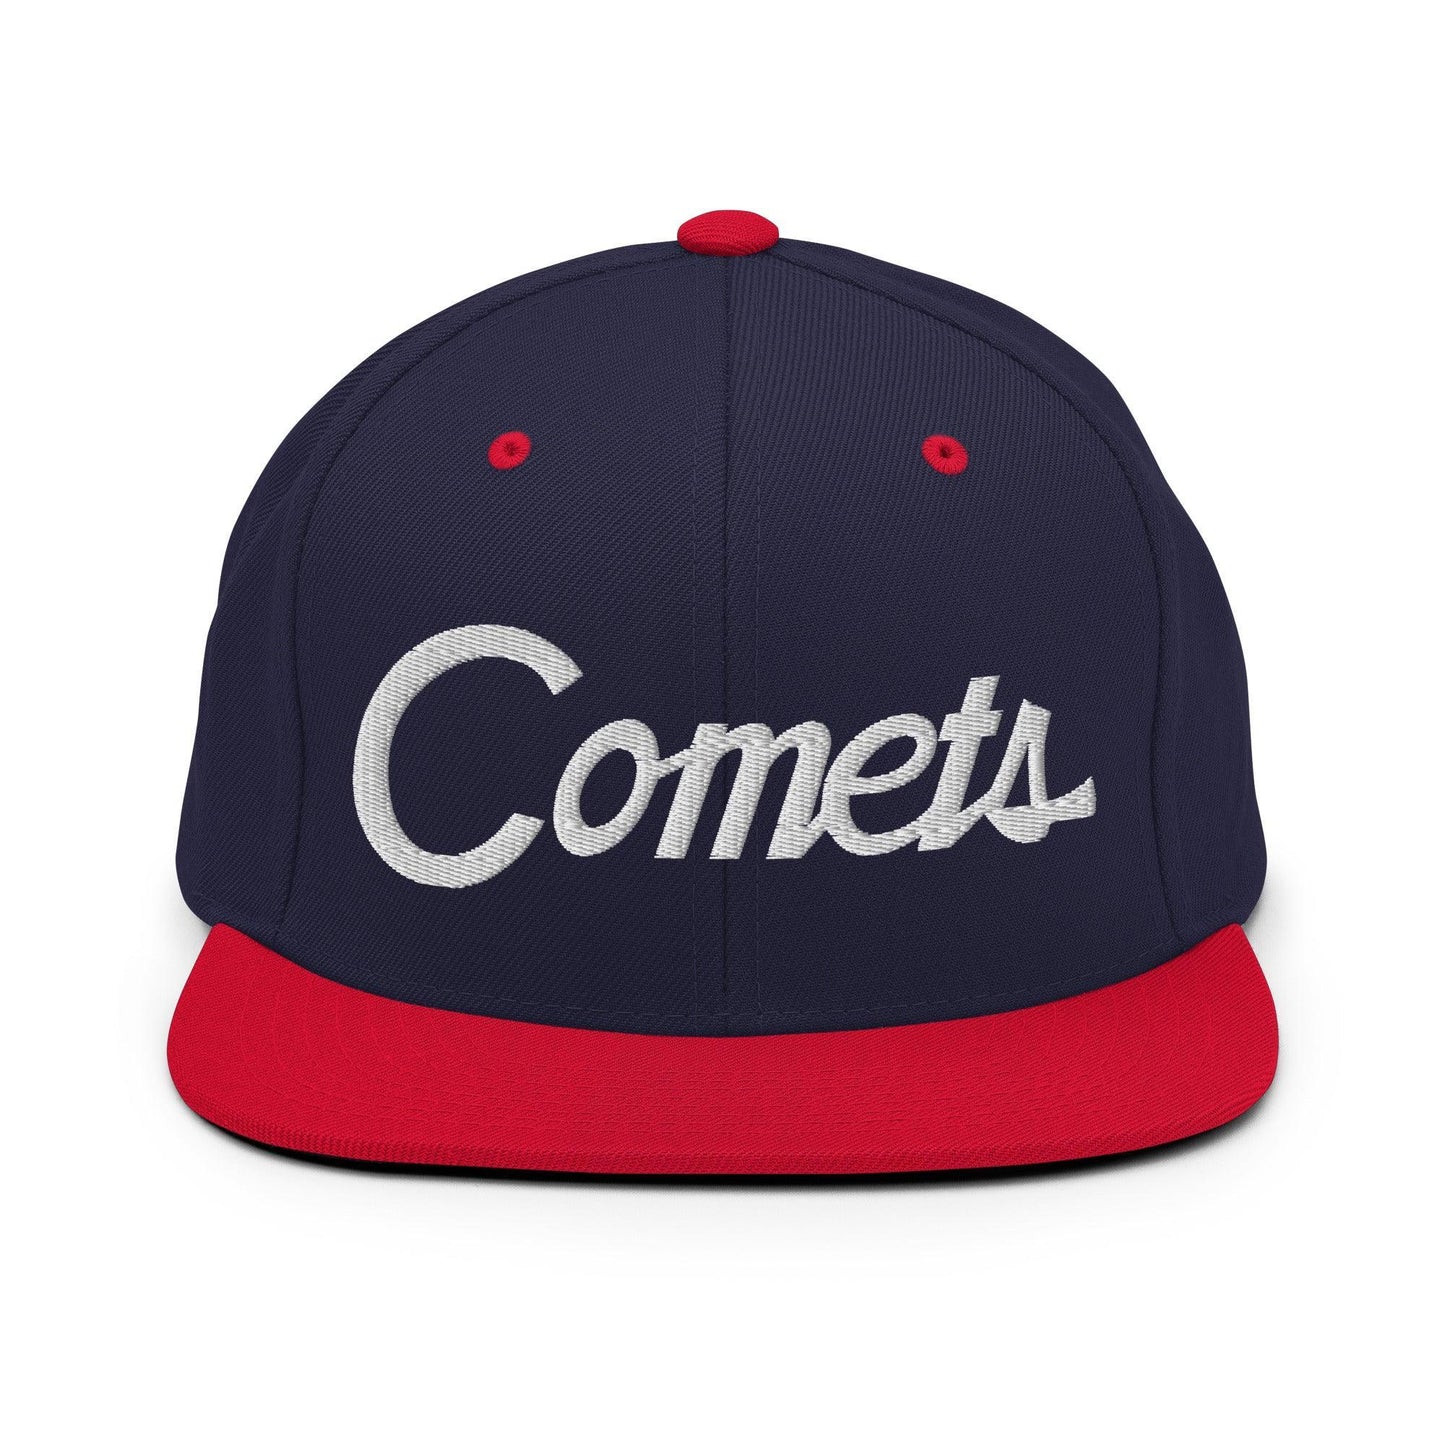 Comets School Mascot Script Snapback Hat Navy Red